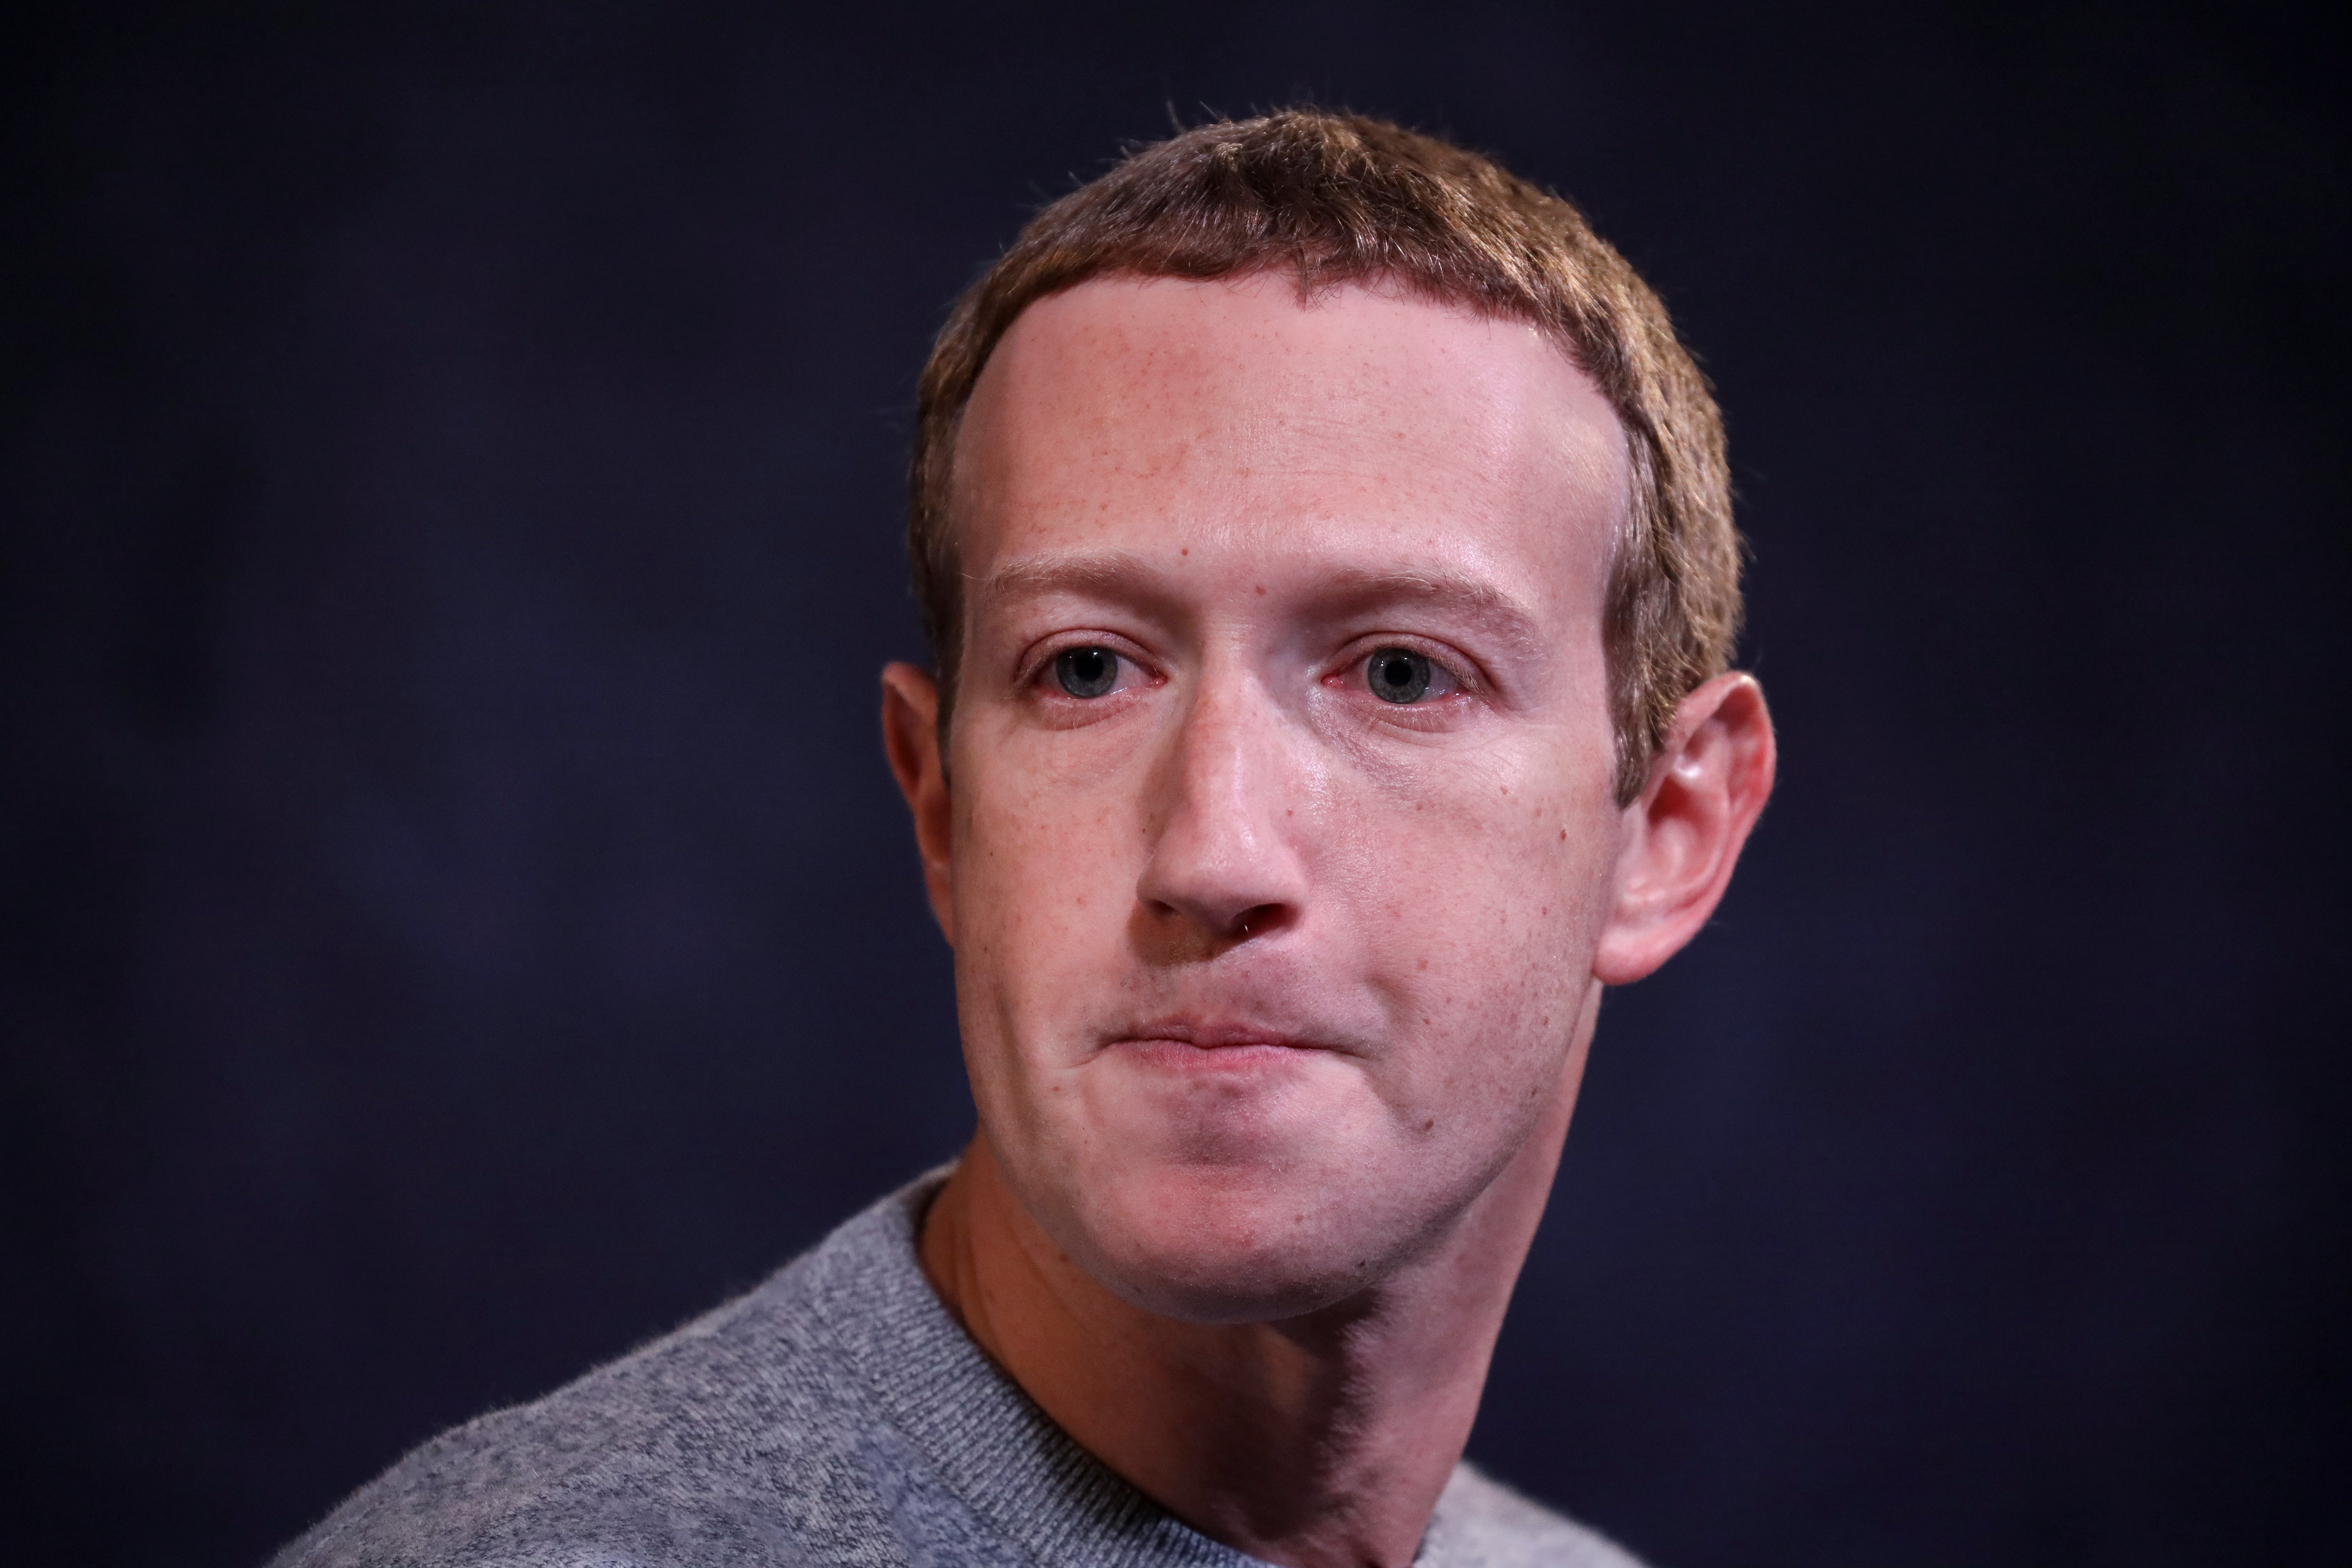 Mark Zuckerberg says Facebook staff won’t need vaccine to return to work